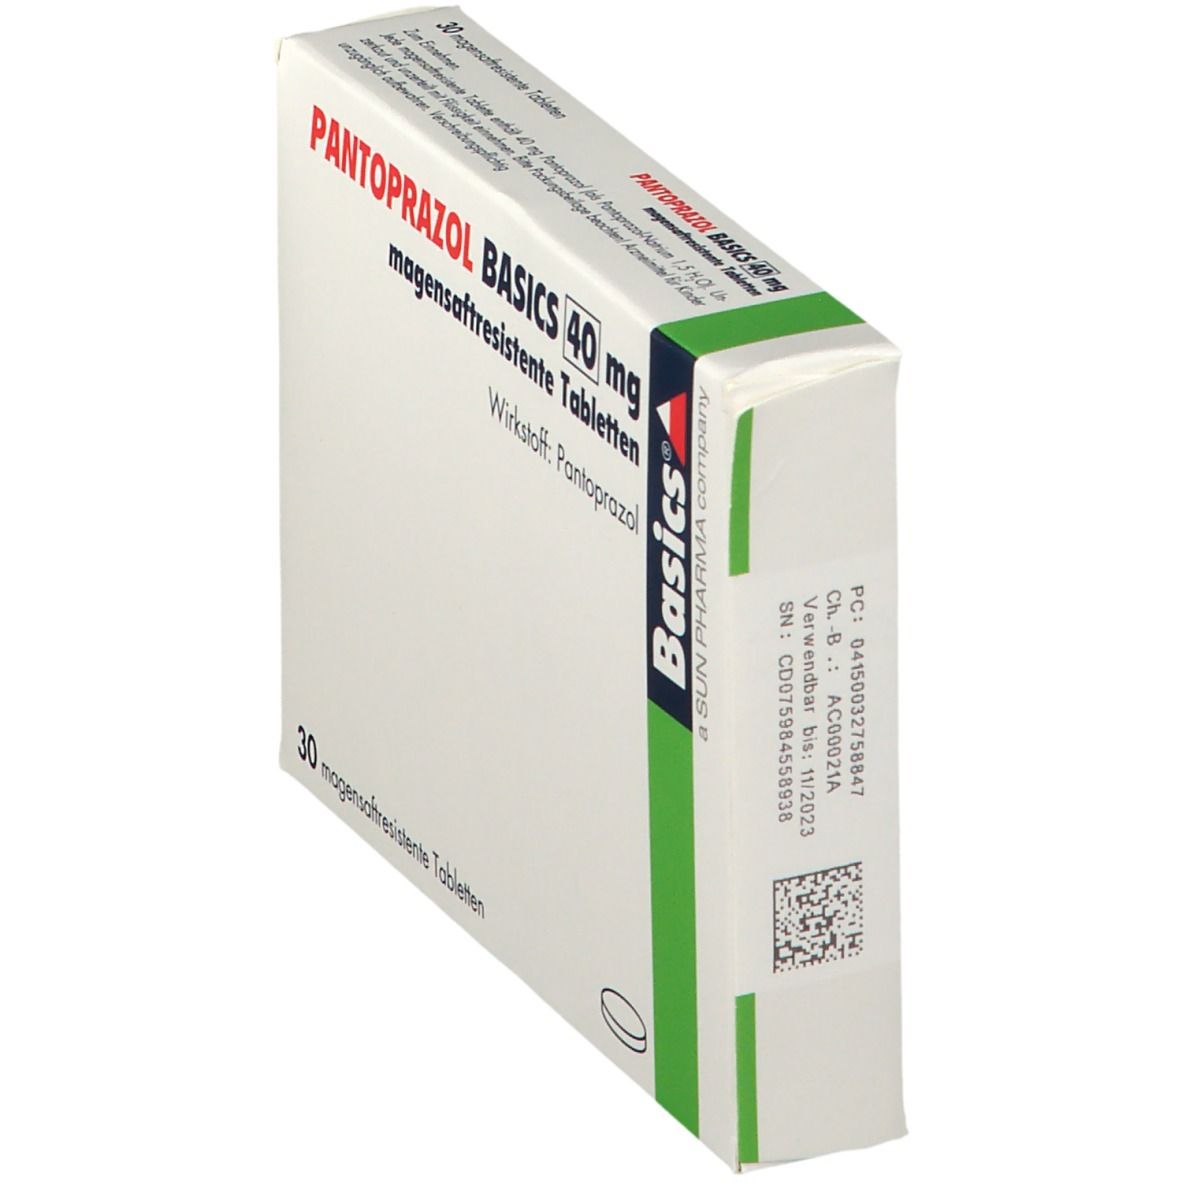 PANTOPRAZOL BASICS 40 mg